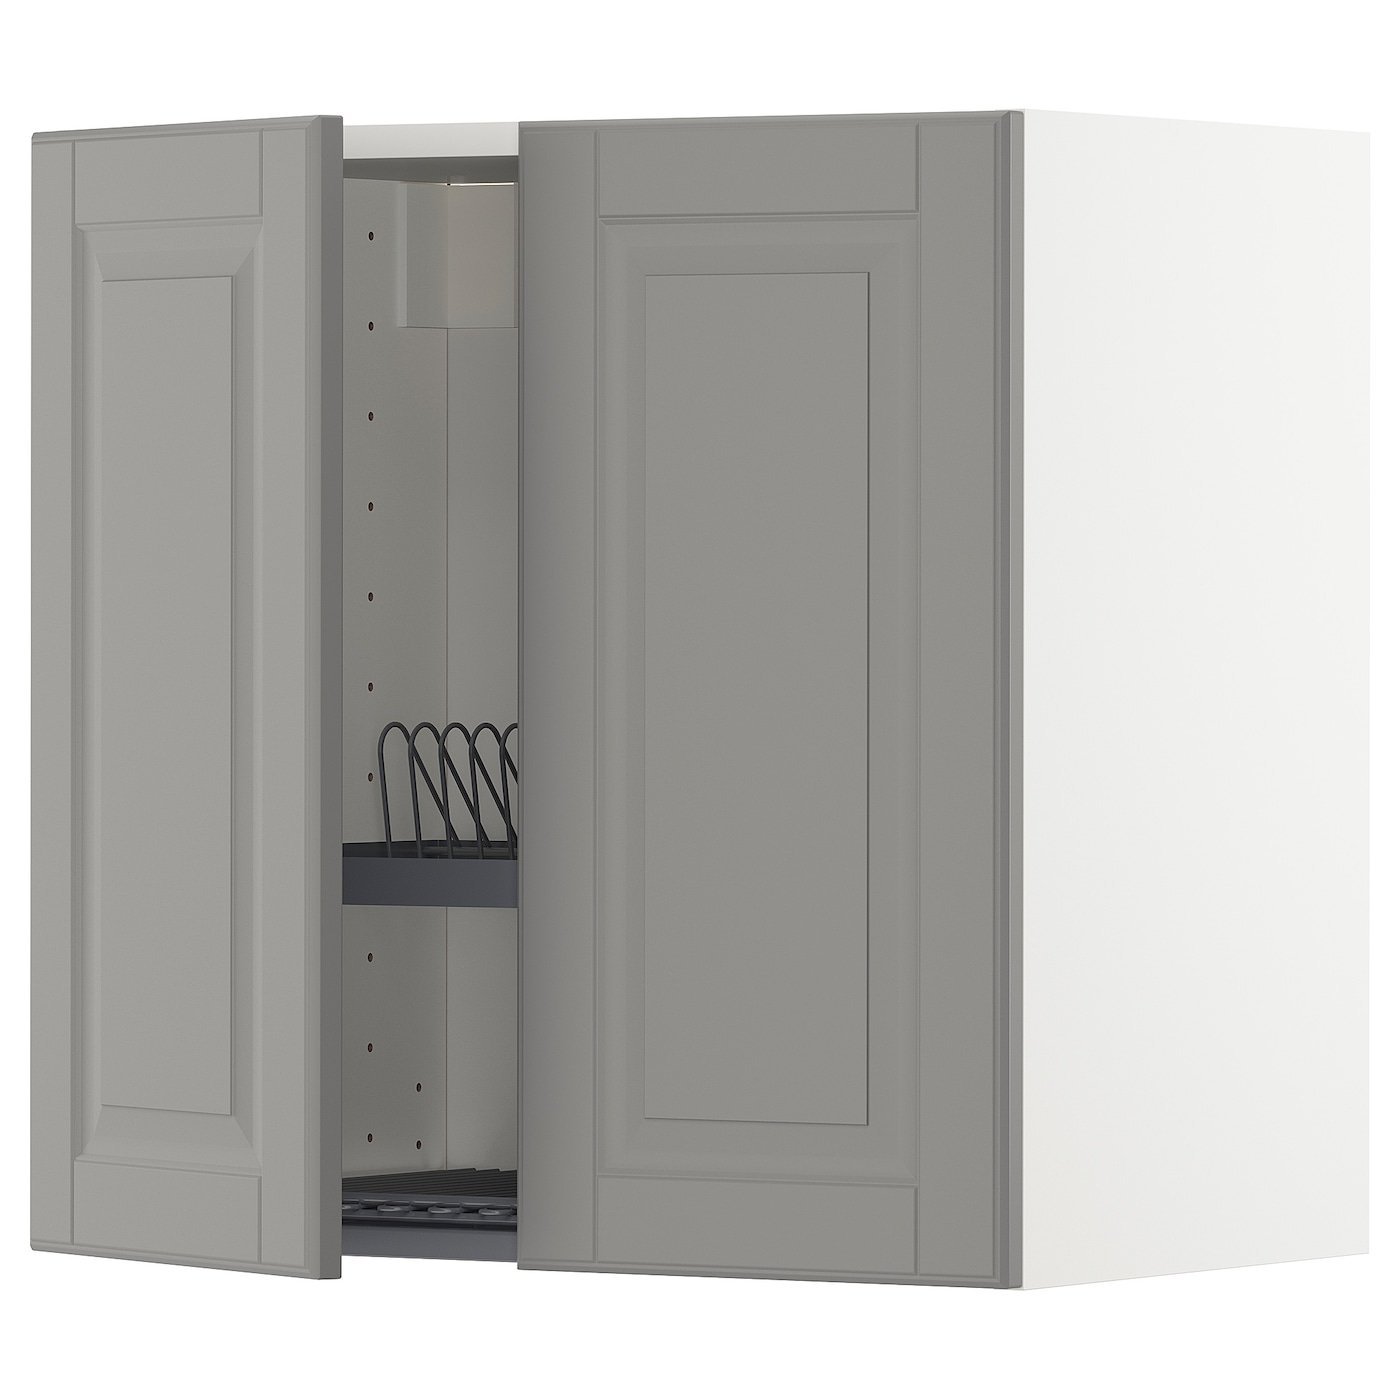 Навесной шкаф с сушилкой - METOD IKEA/ МЕТОД ИКЕА, 60х60 см, темно-серый/белый